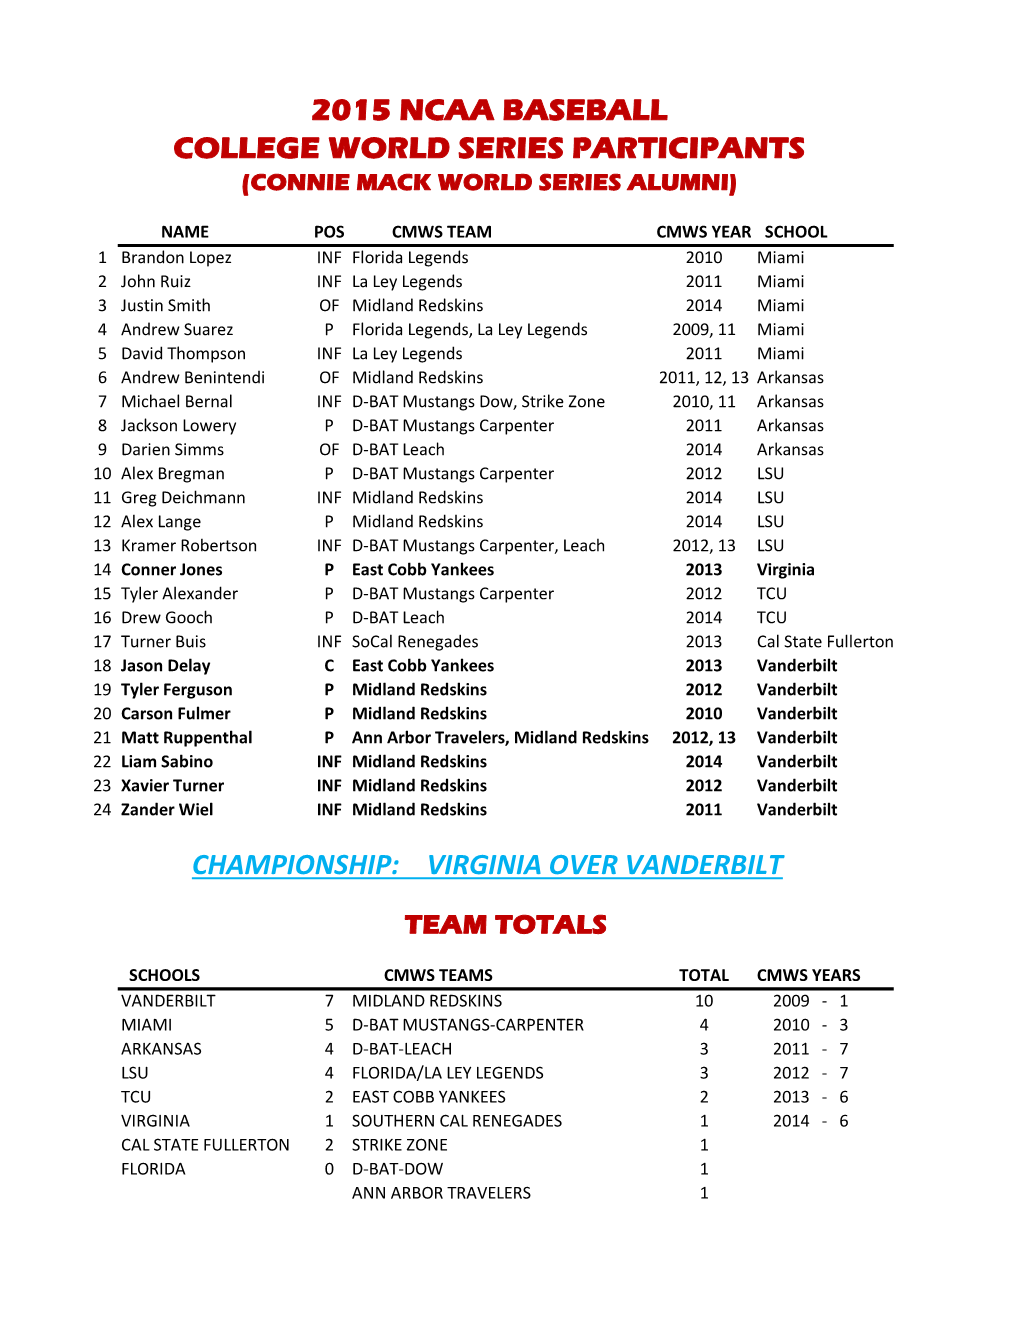 2015 Ncaa Baseball College World Series Participants (Connie Mack World Series Alumni)